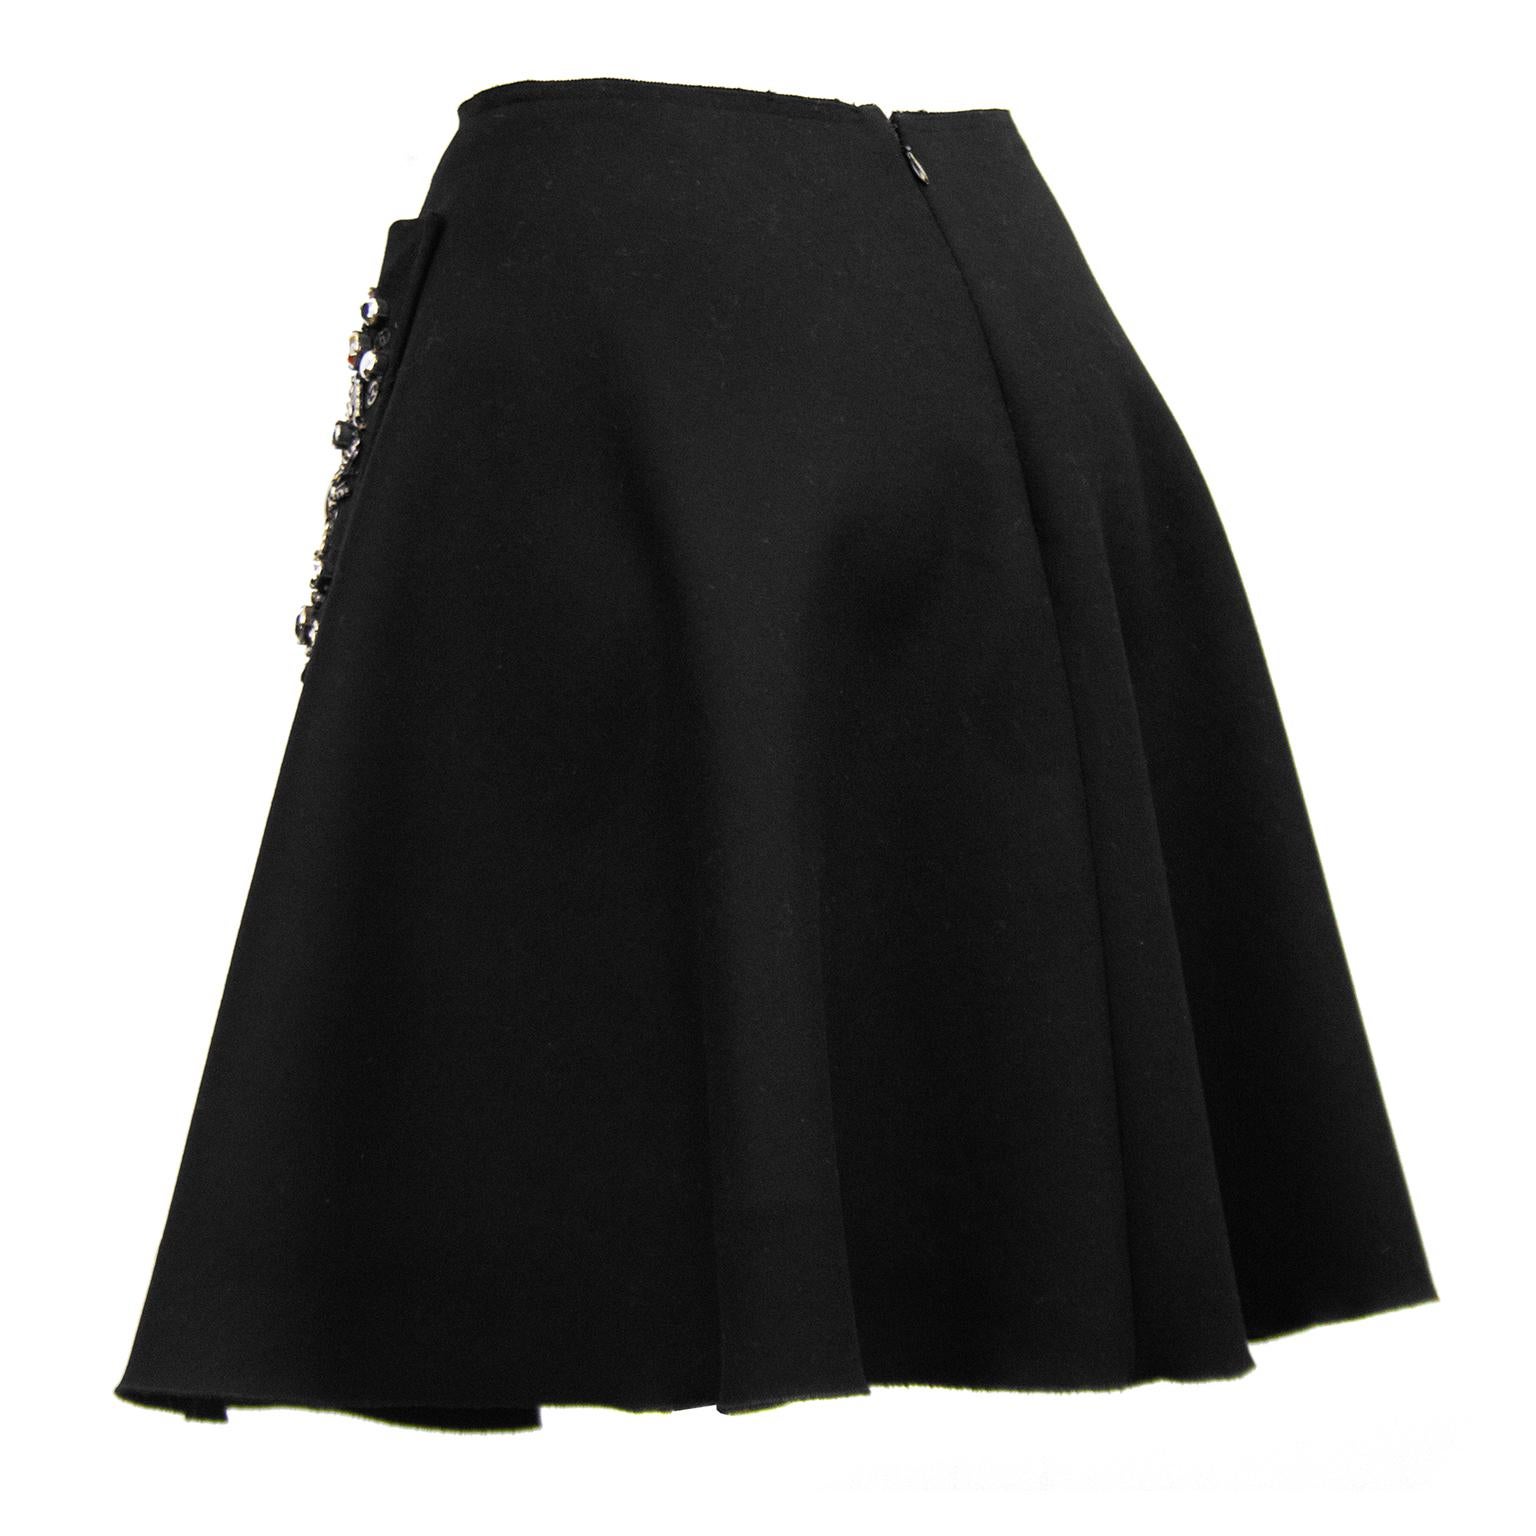 prada embellished skirt